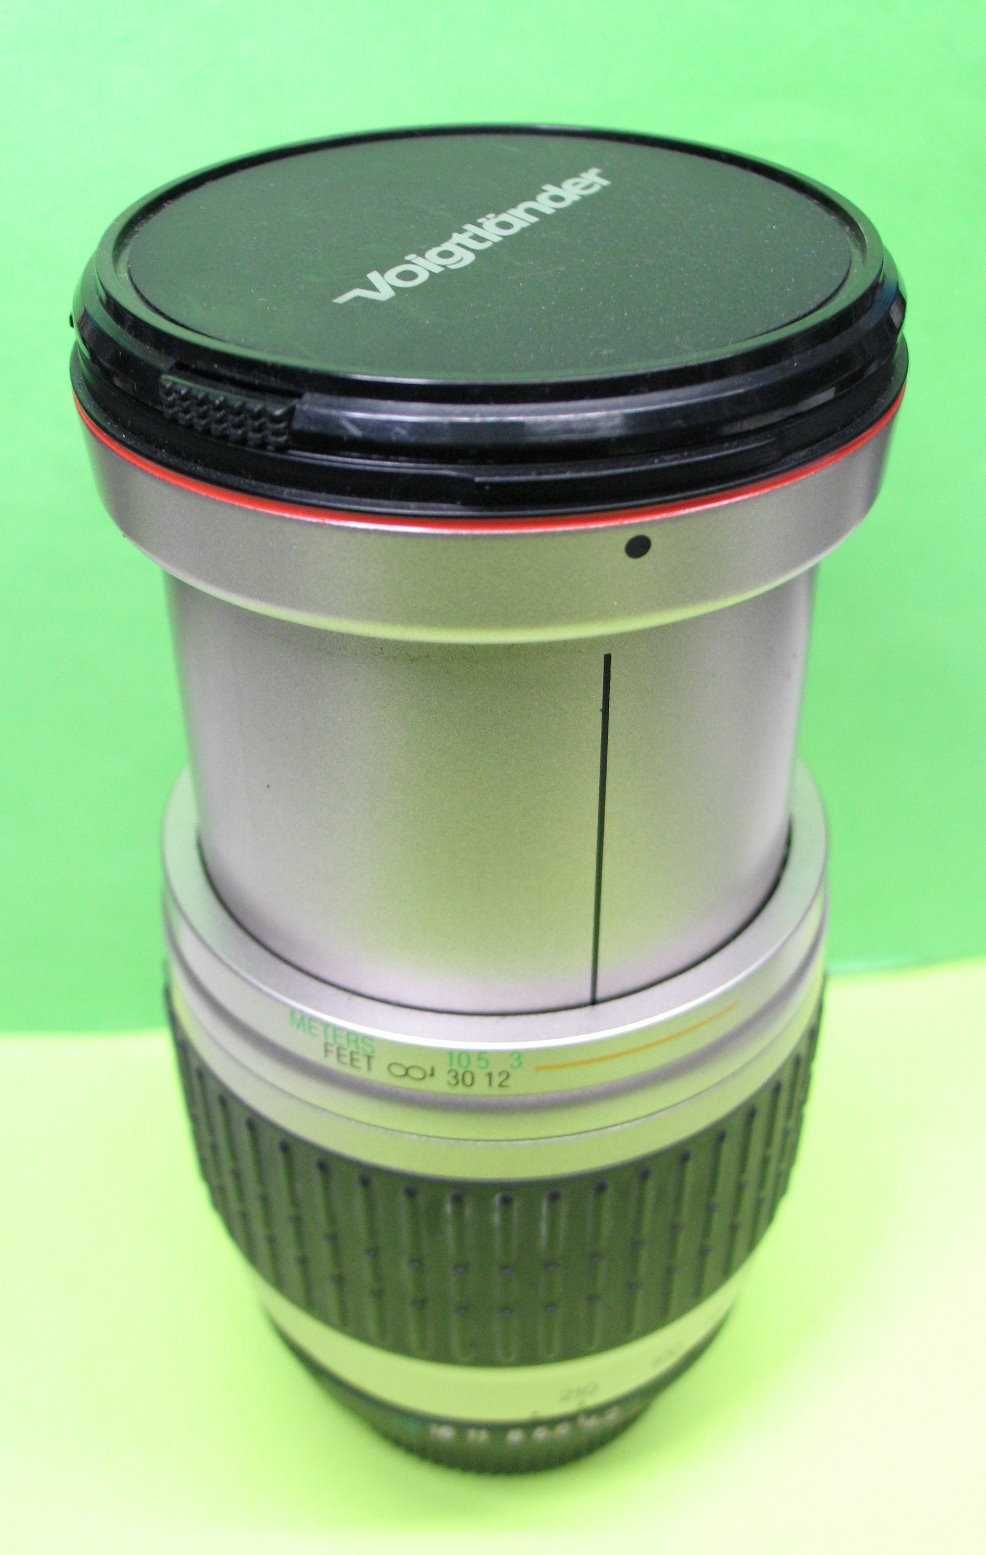 Voigtlander APO-Zoomar 28-210mm f4.2-6.5 VMV  - Nikon AF Mount